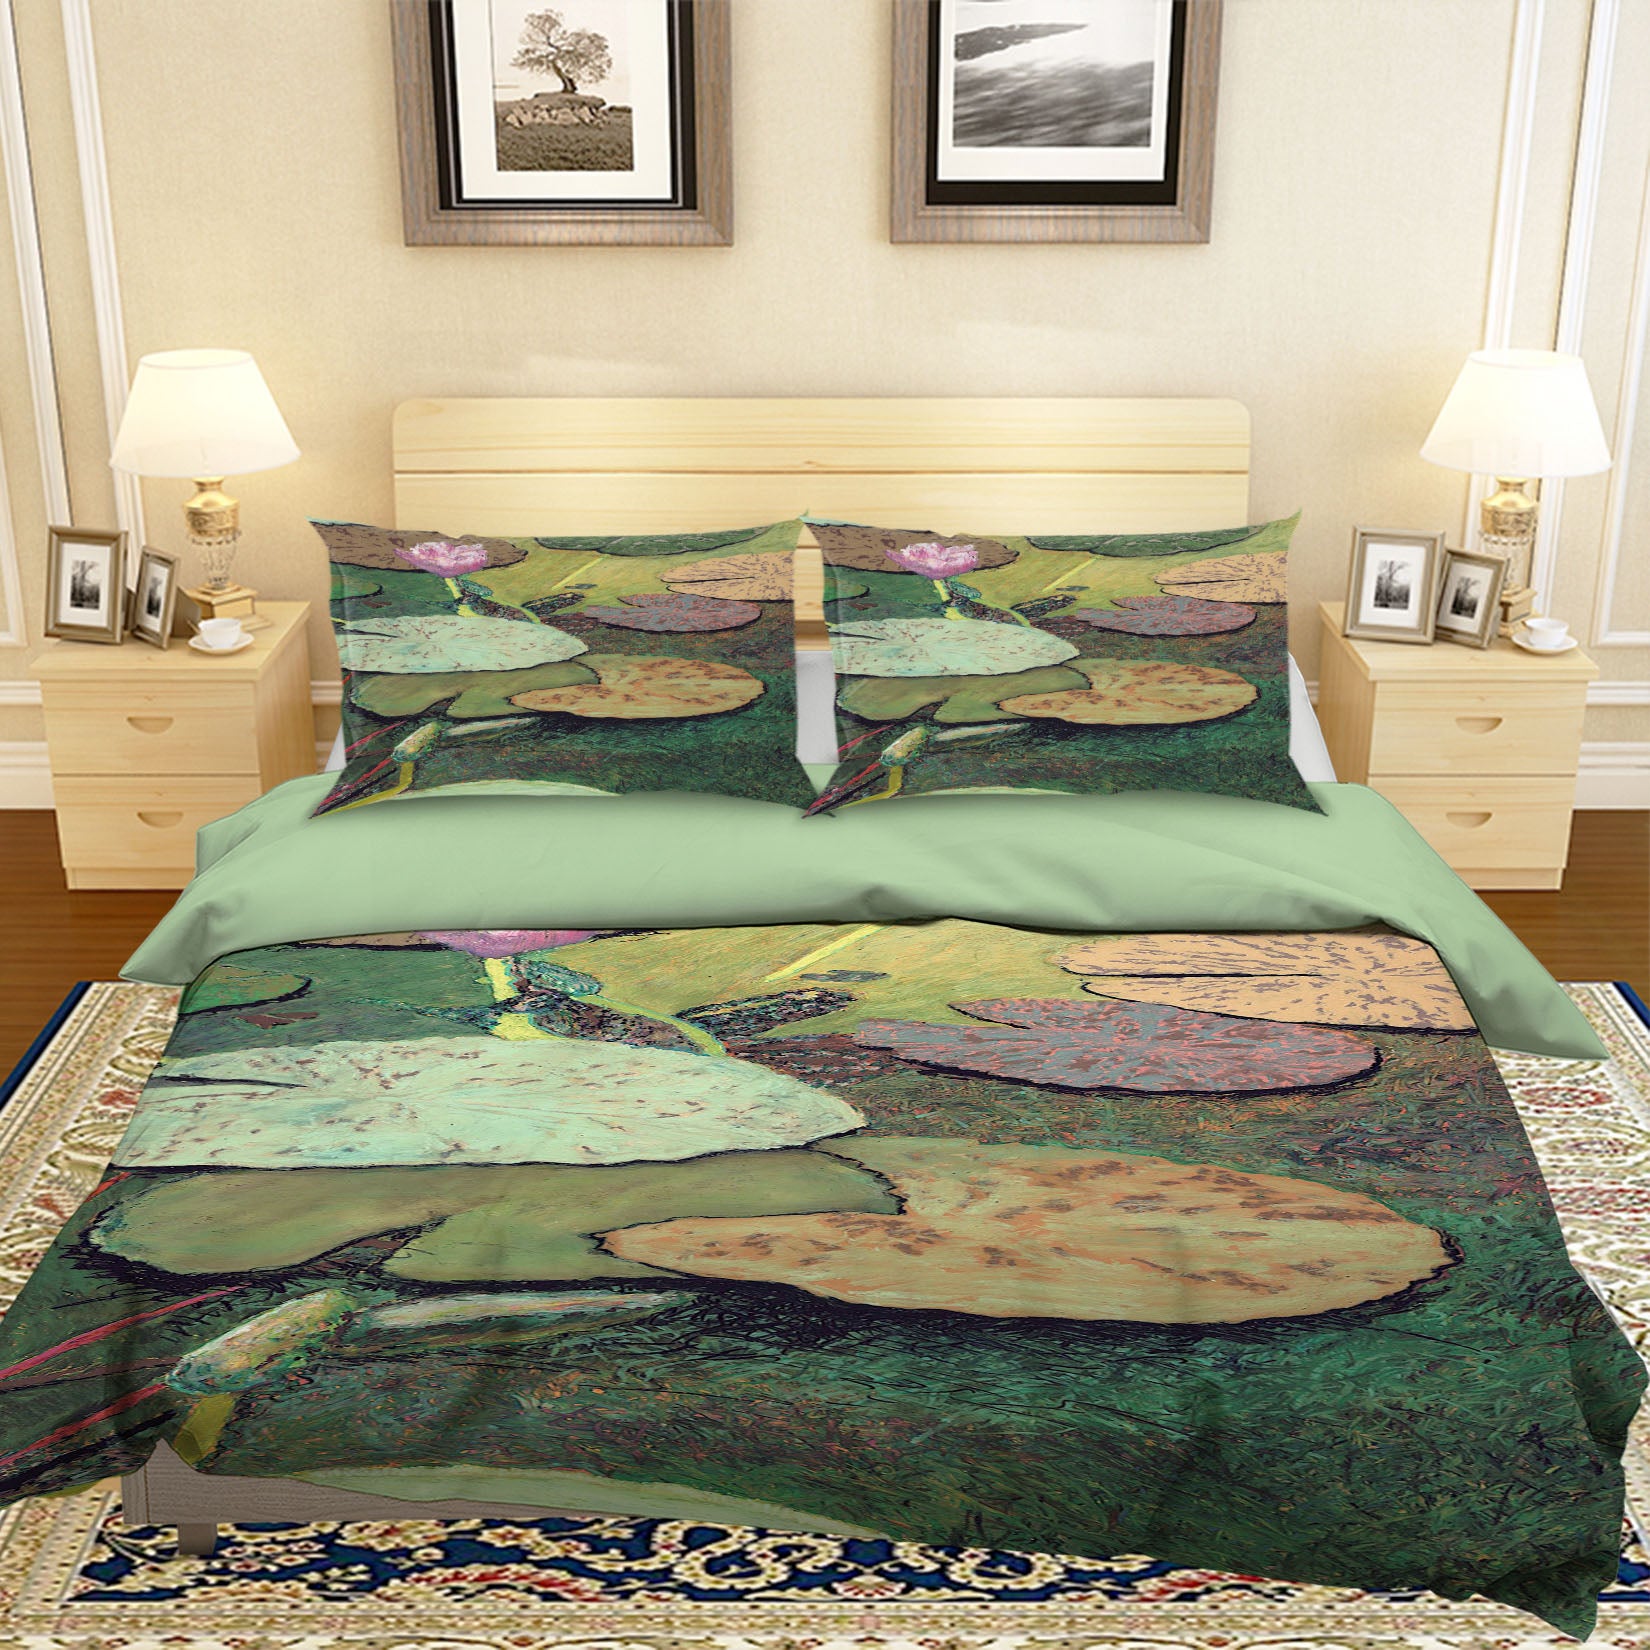 3D Emerald Pond 1160 Allan P. Friedlander Bedding Bed Pillowcases Quilt